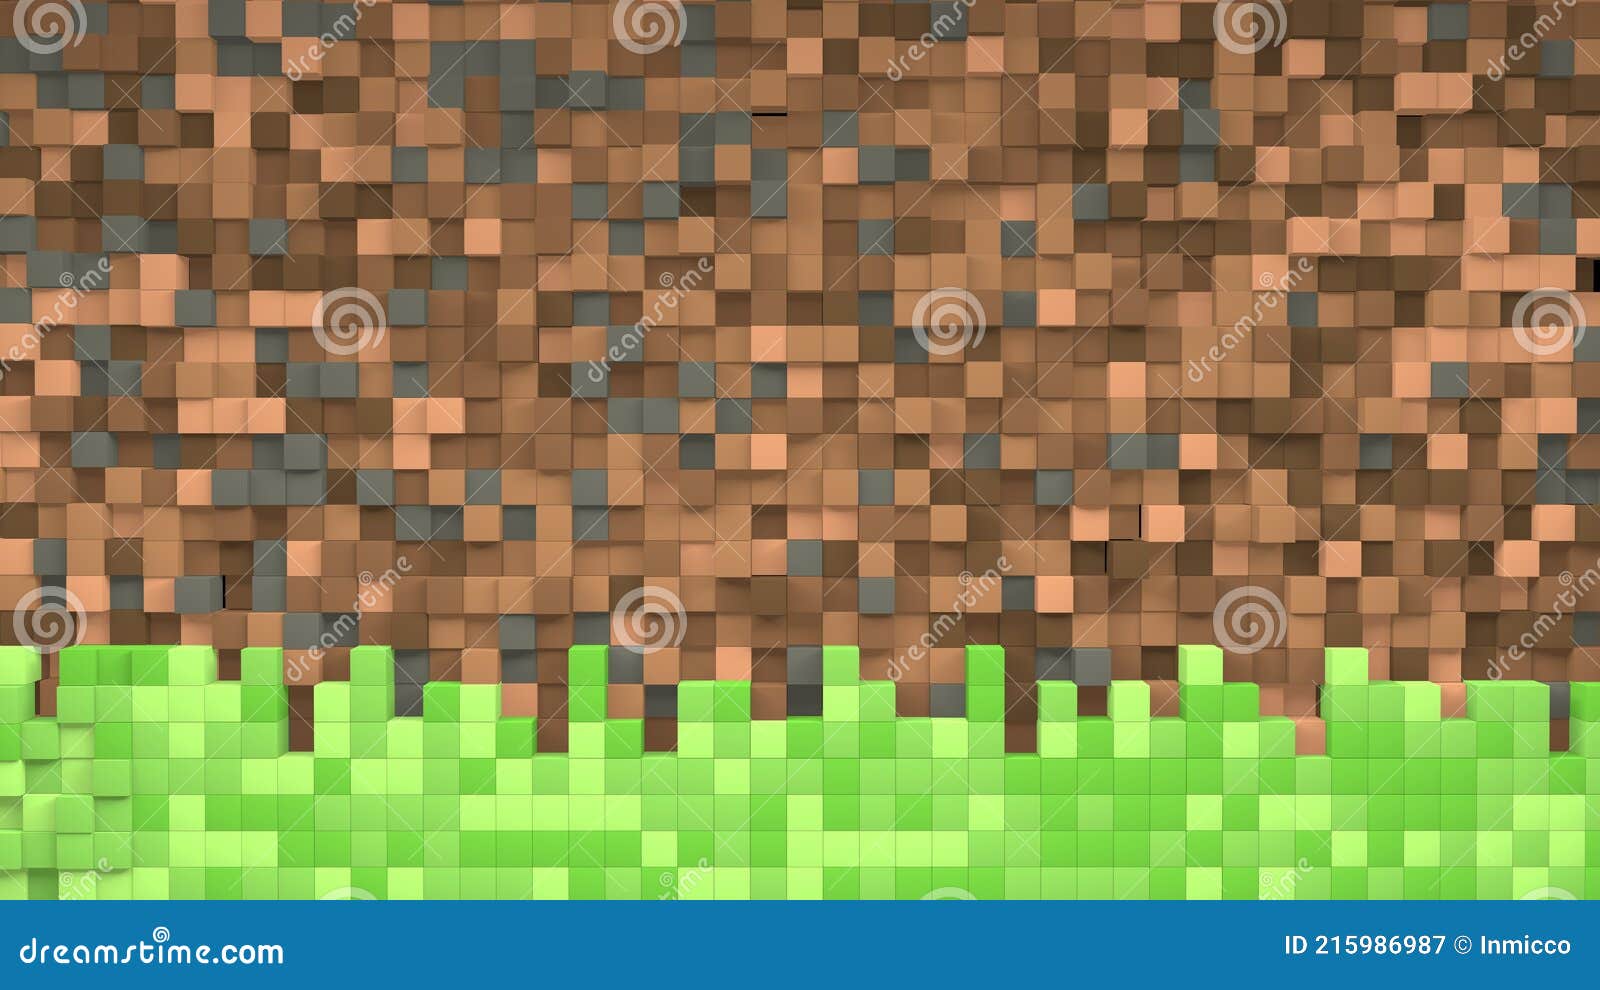 minecraft stone block wallpaper